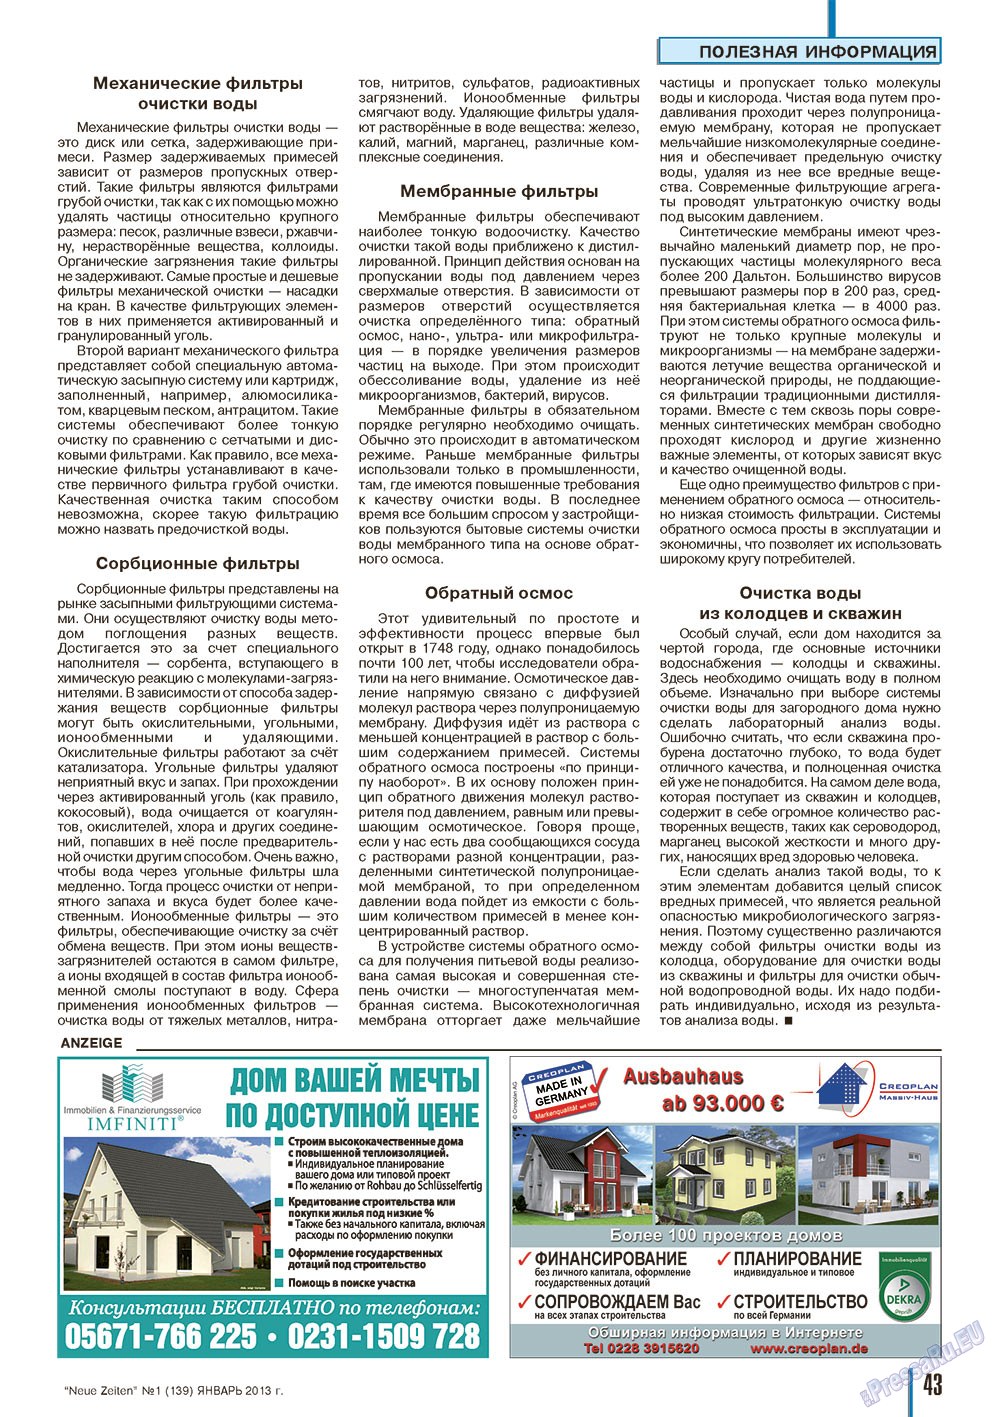 Neue Zeiten (журнал). 2013 год, номер 1, стр. 43